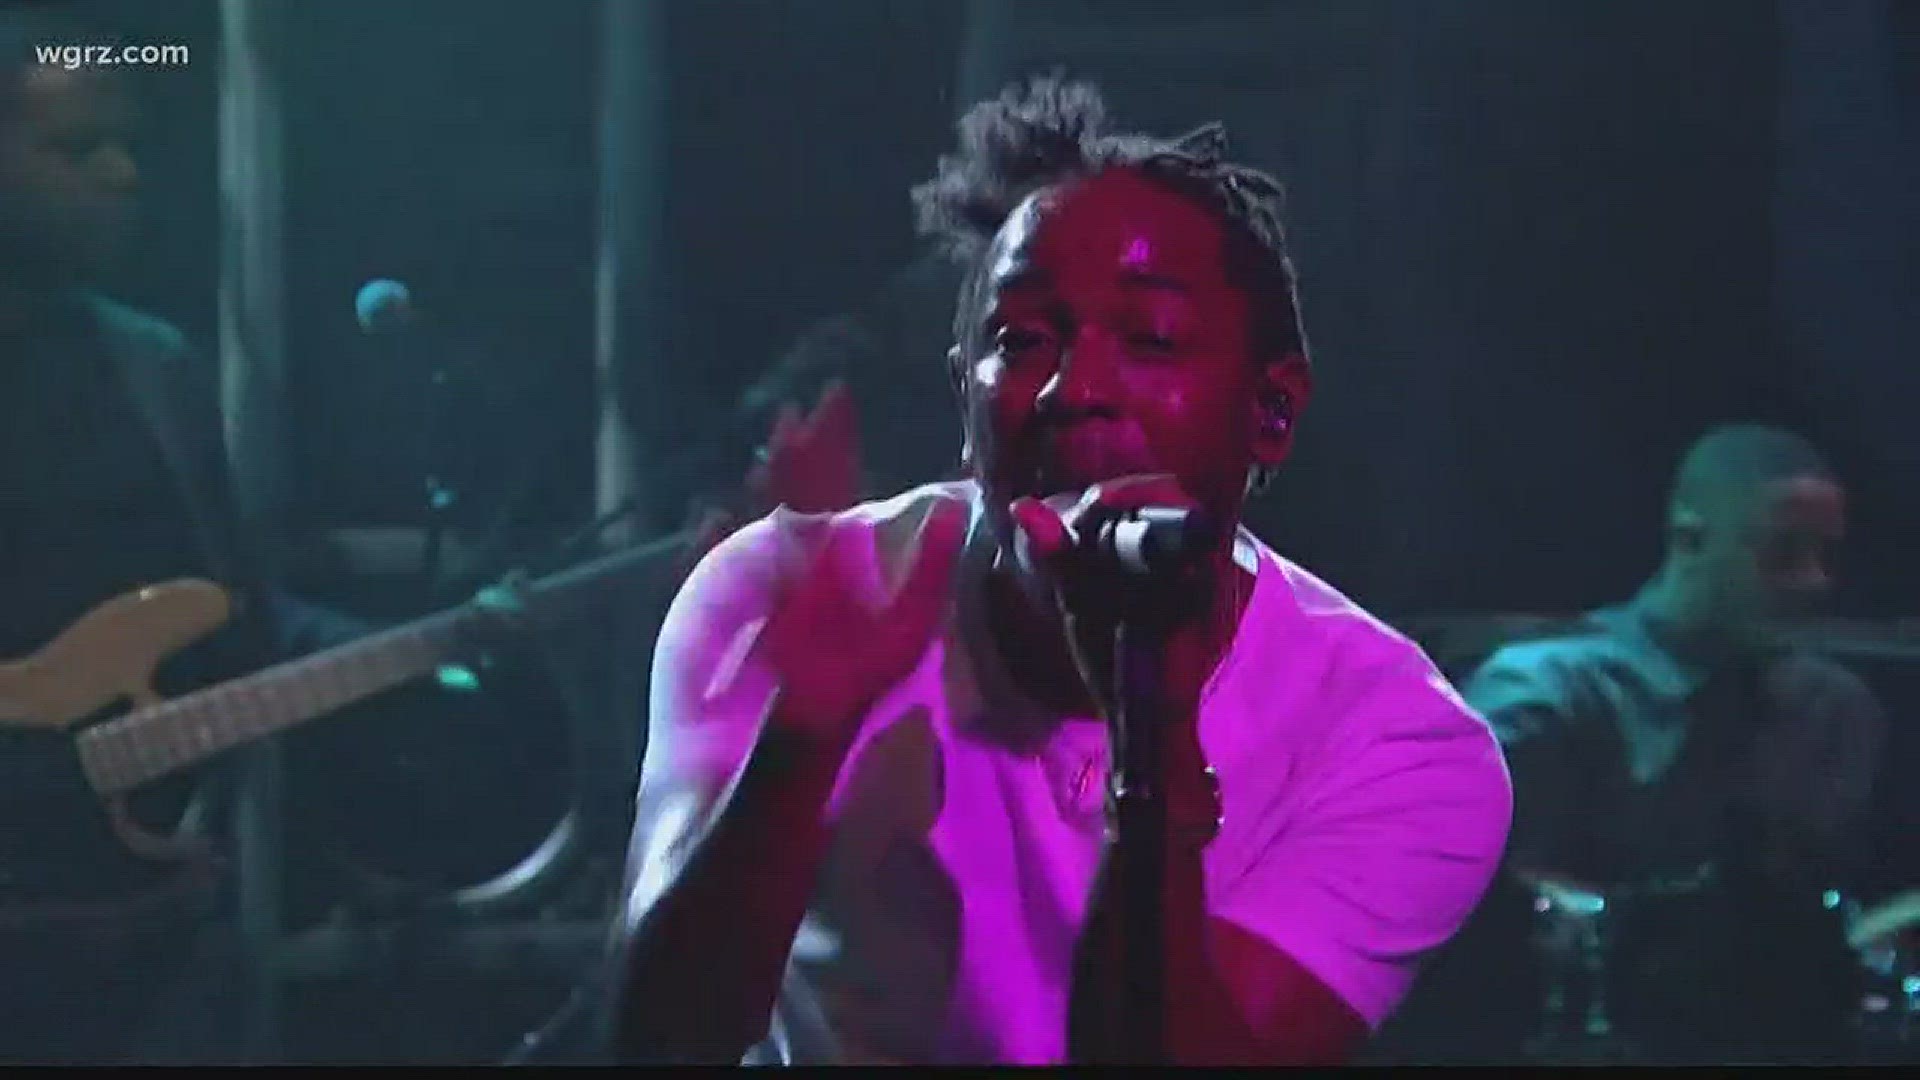 Kendrick Lamar visits AOL Music on June 4, 2012 in New York